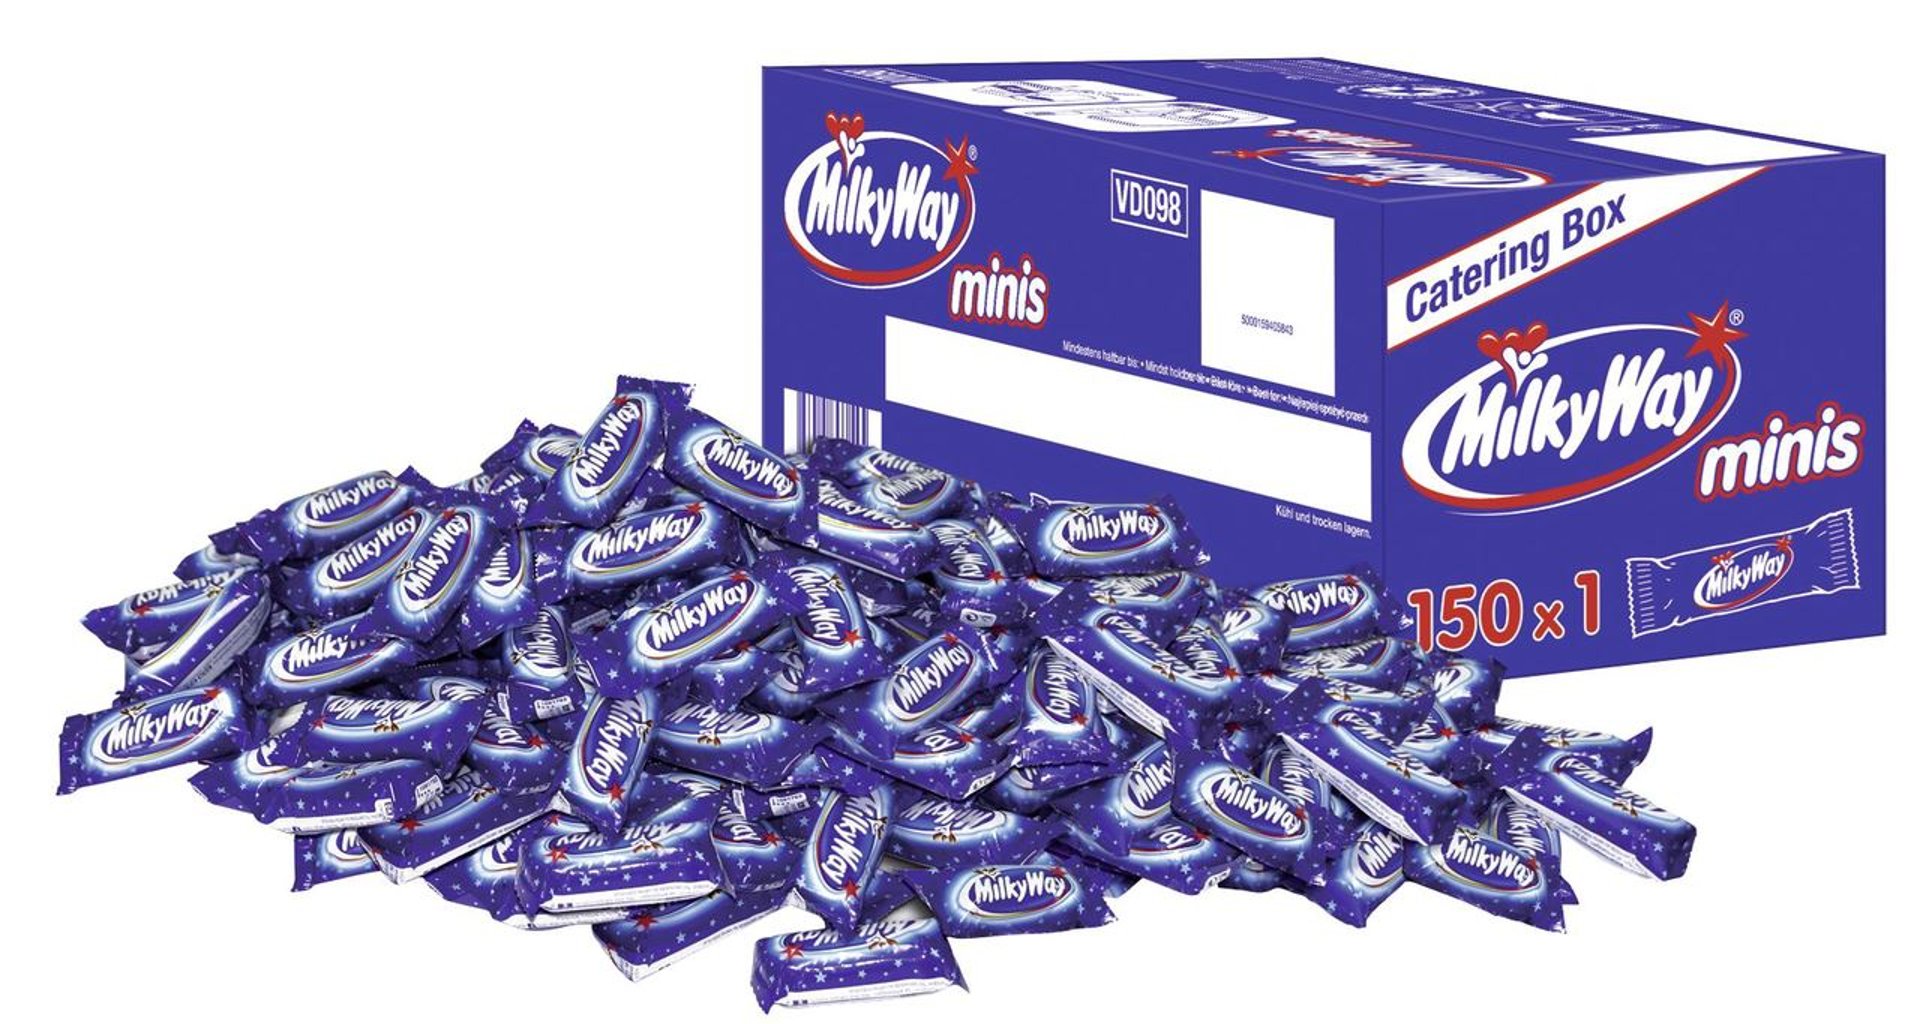 Milky Way - Schokoriegel Minis Catering Box 150 Stück à 15,5 g - 2,325 kg Karton